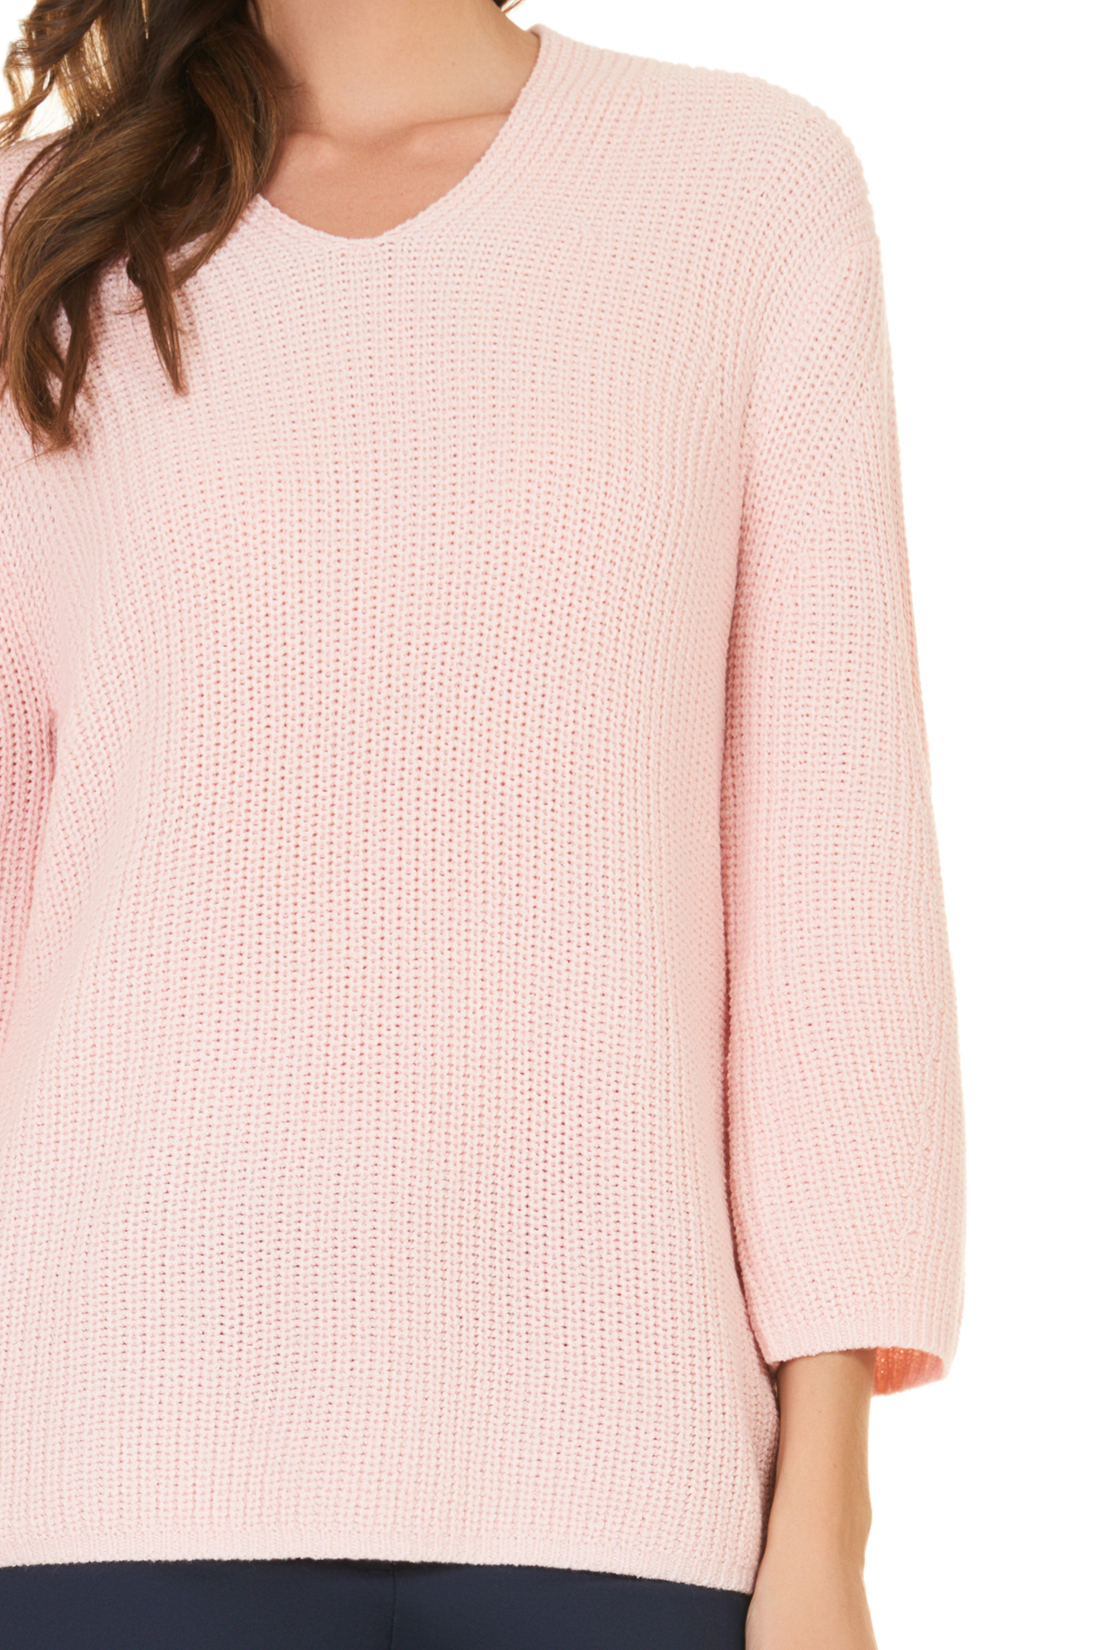 Пуловер оригинального кроя (арт. baon B137504), размер XXL, цвет розовый Пуловер оригинального кроя (арт. baon B137504) - фото 4